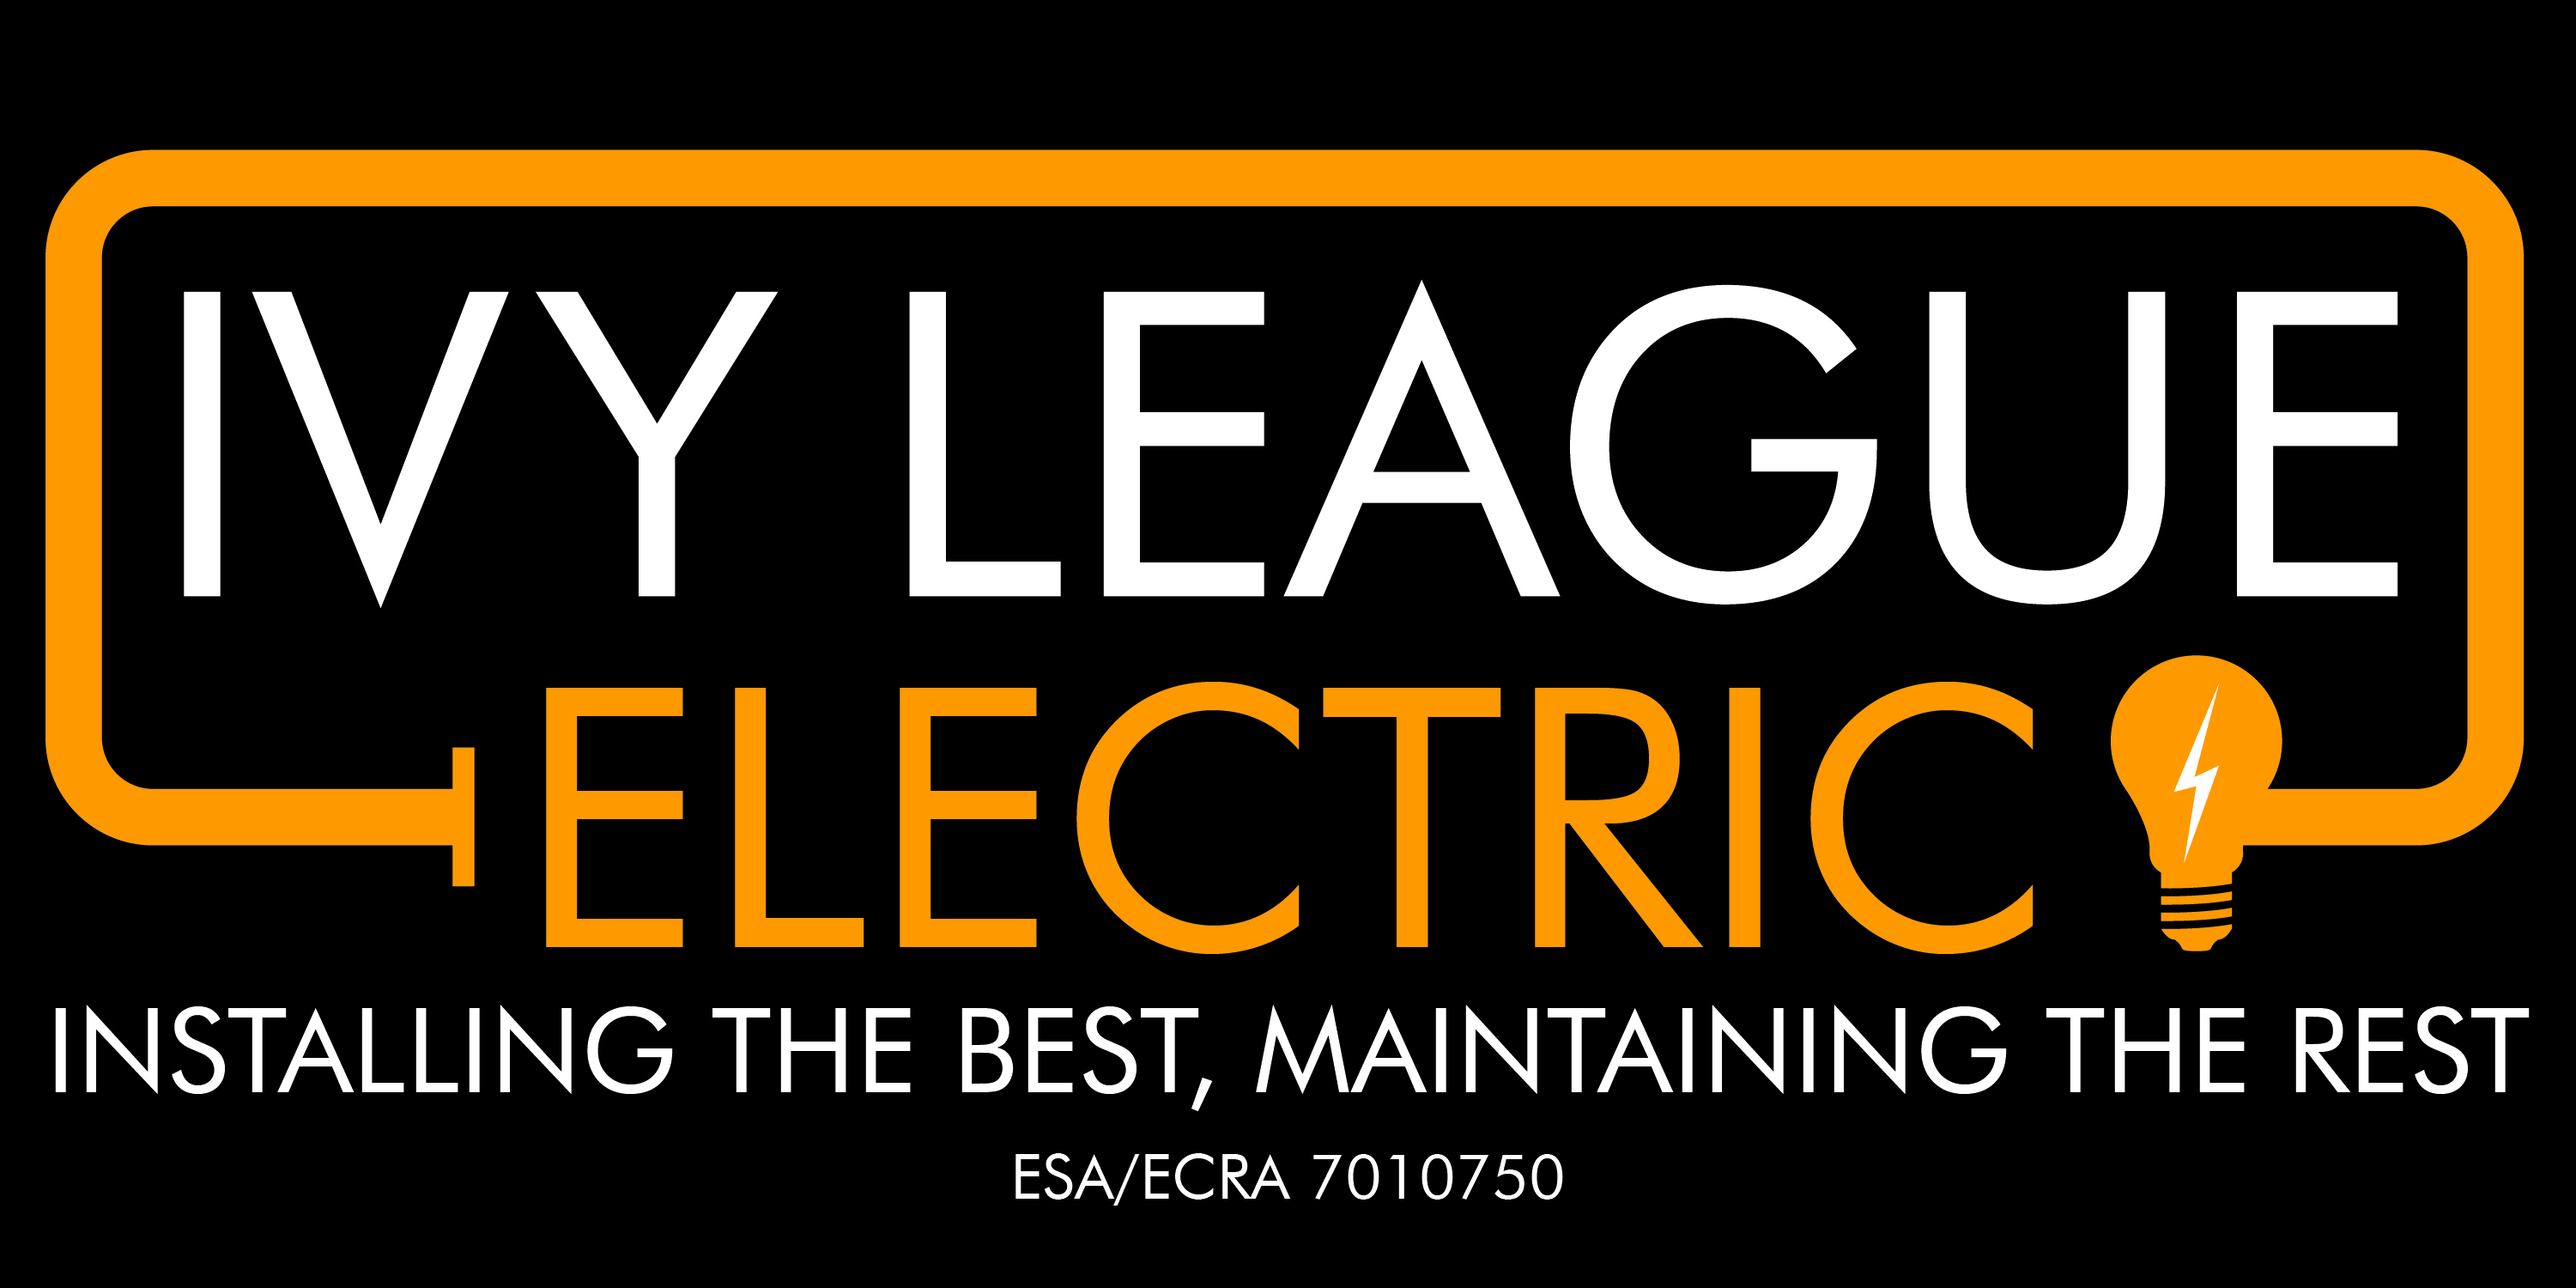 Ivy League Electric's logo